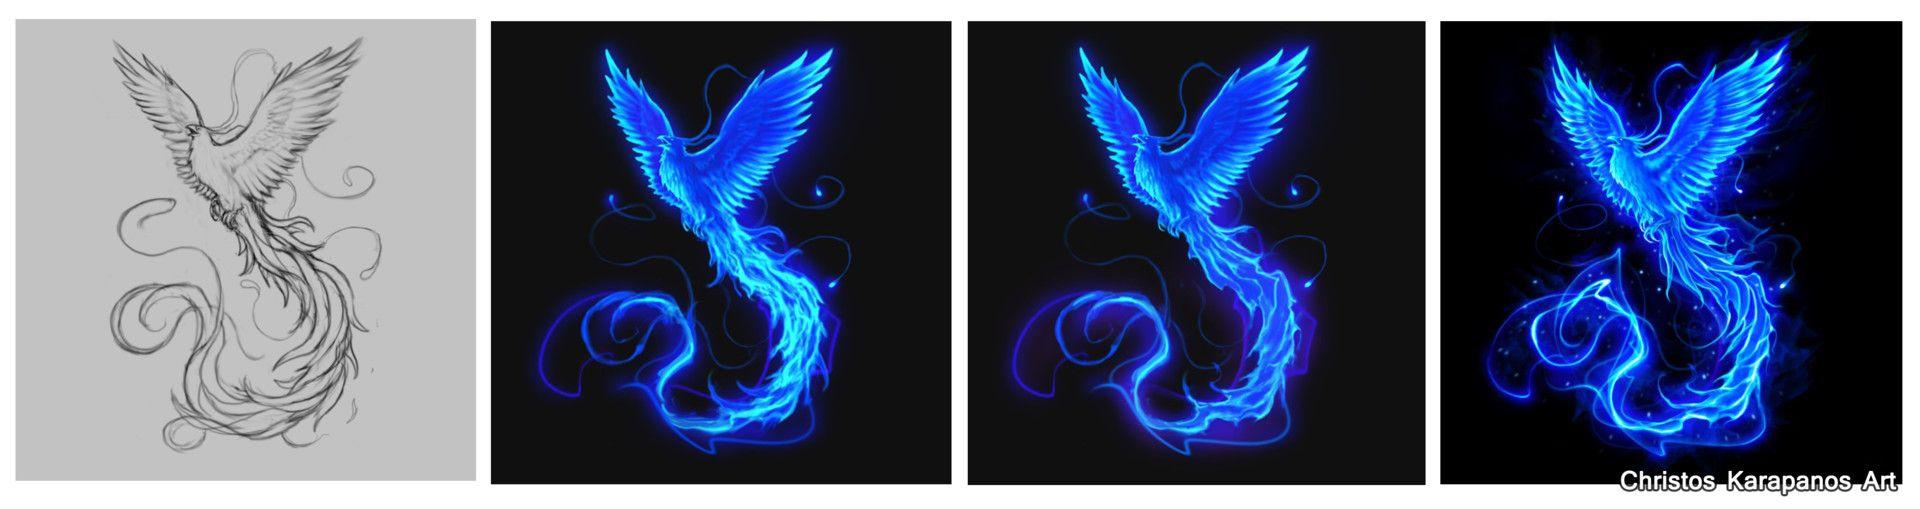 Blue Phoenix Logo - Blue Phoenix logo, Christos Karapanos